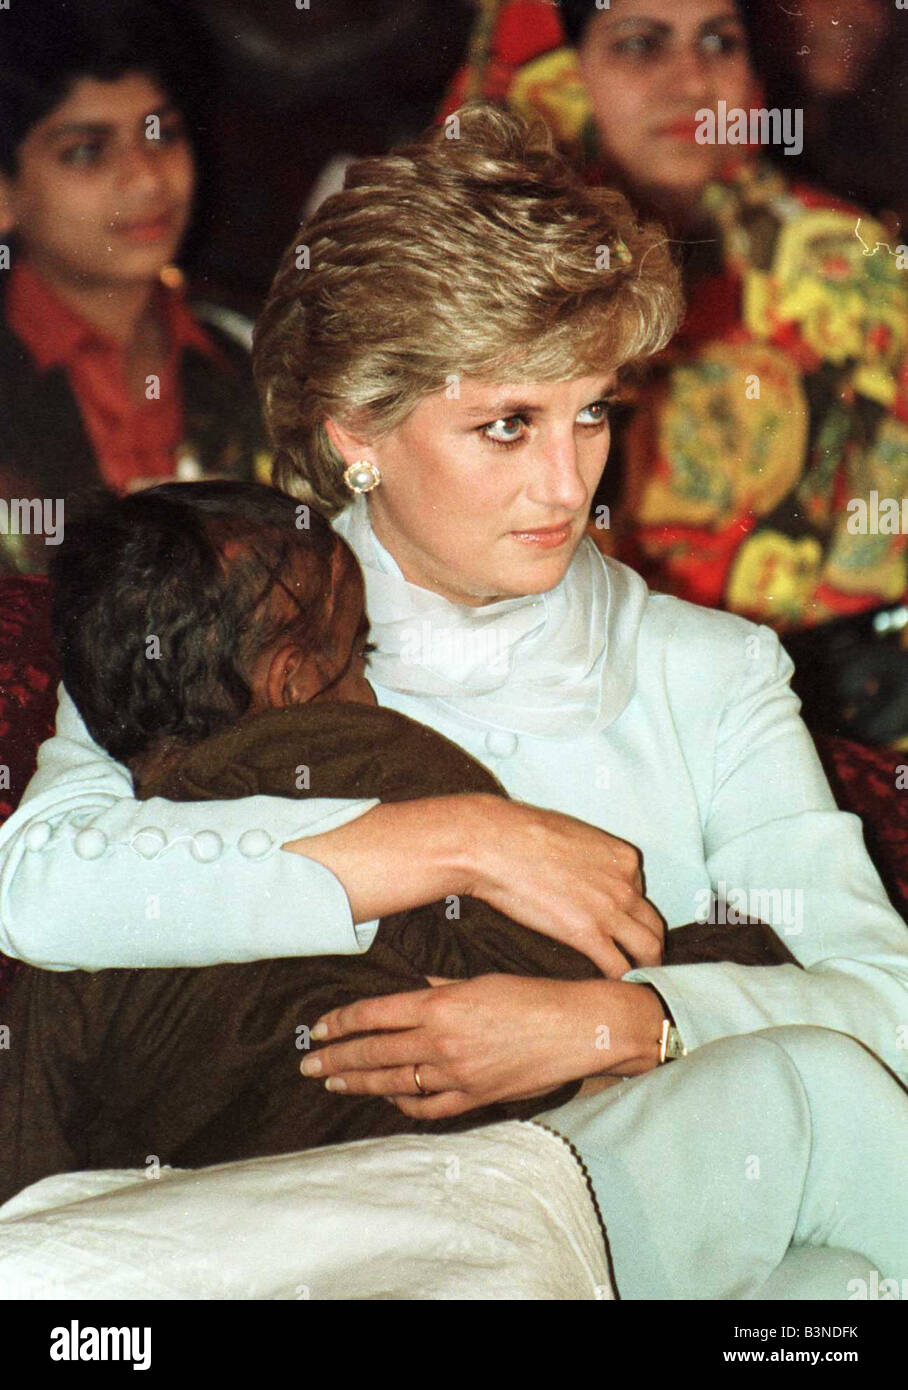 La princesa Diana abraza un niño ciego en el Shaukat Khanum